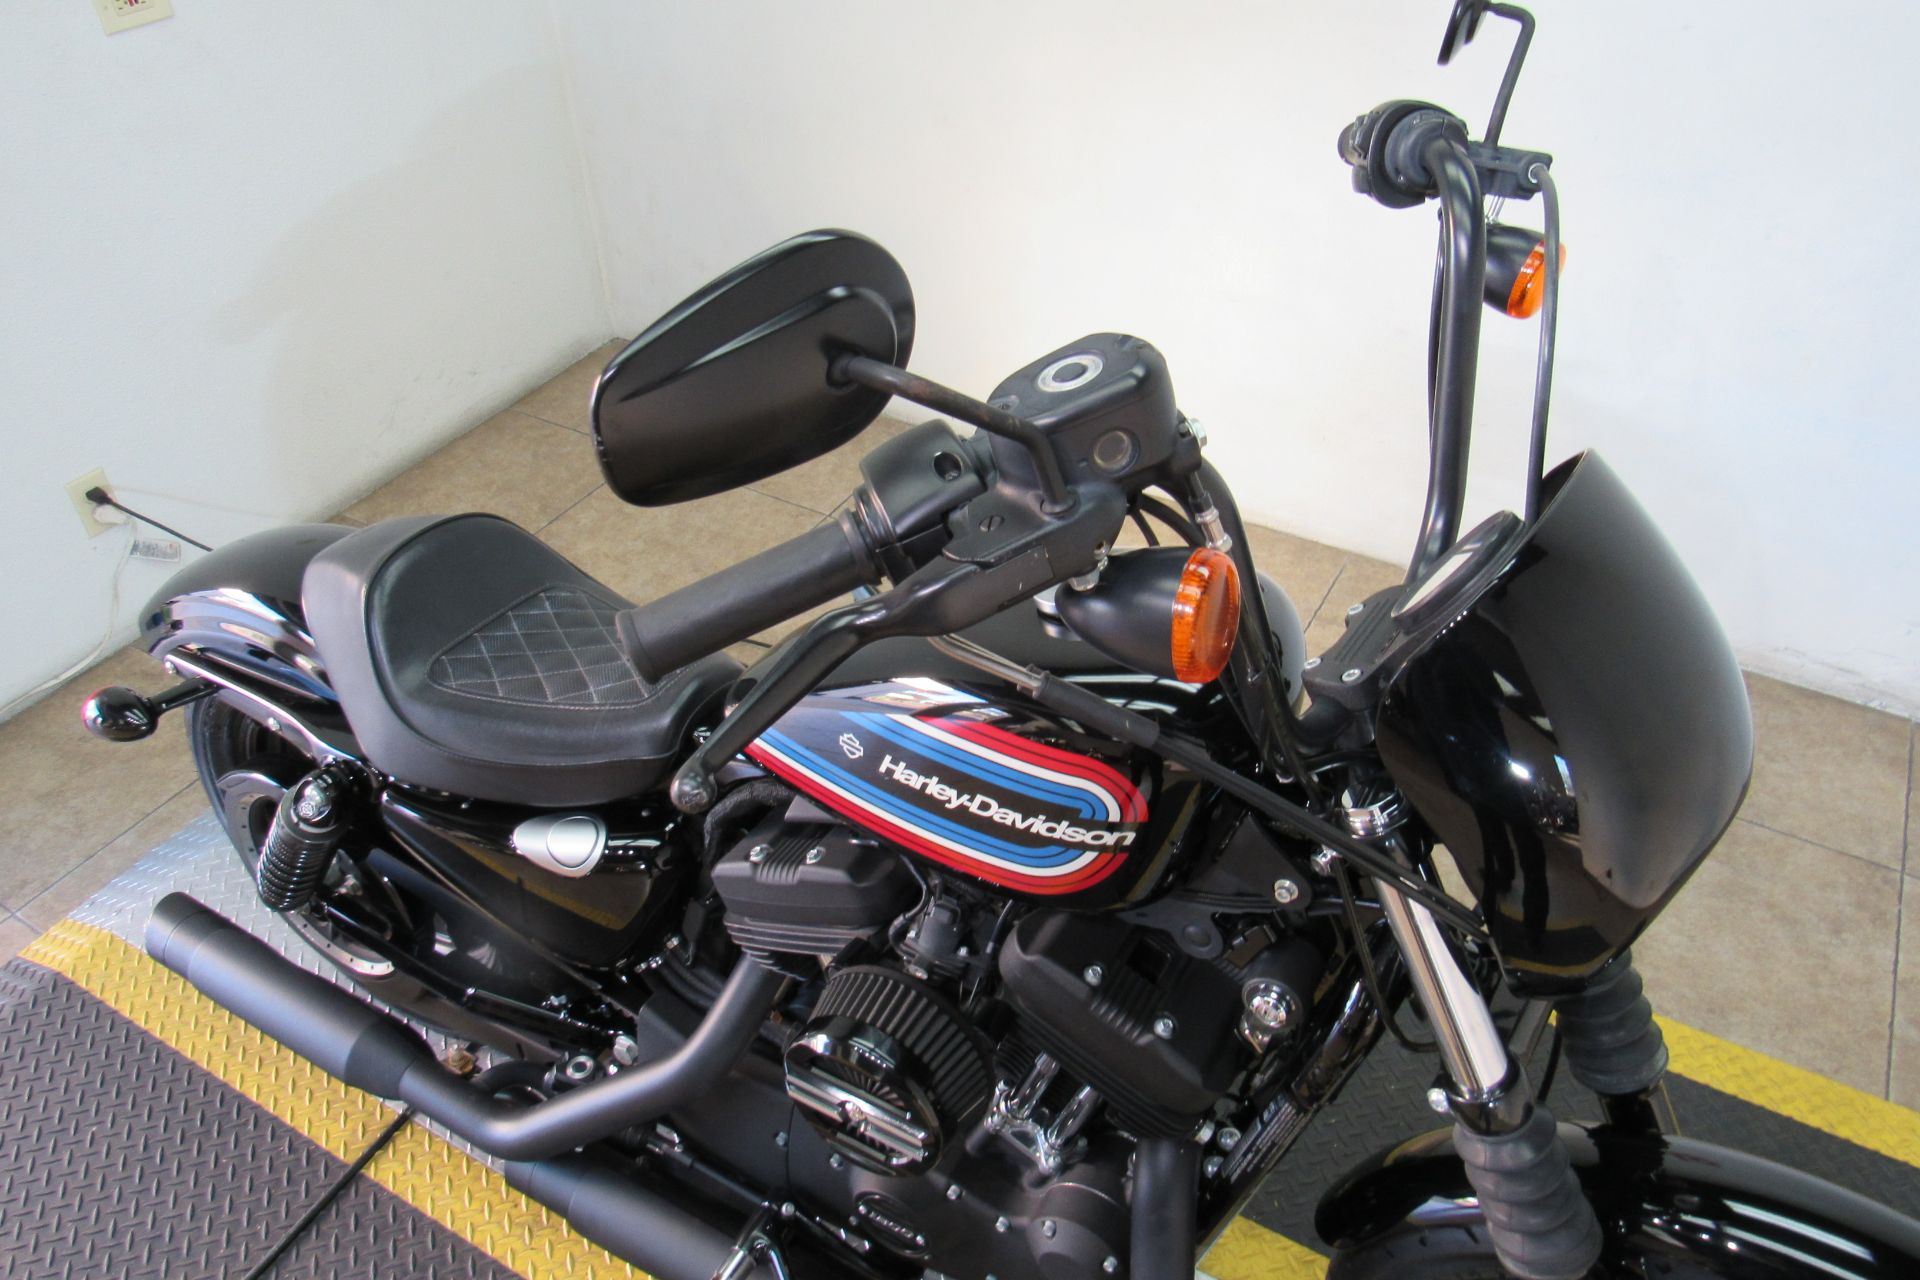 2020 Harley-Davidson Iron 1200™ in Temecula, California - Photo 20